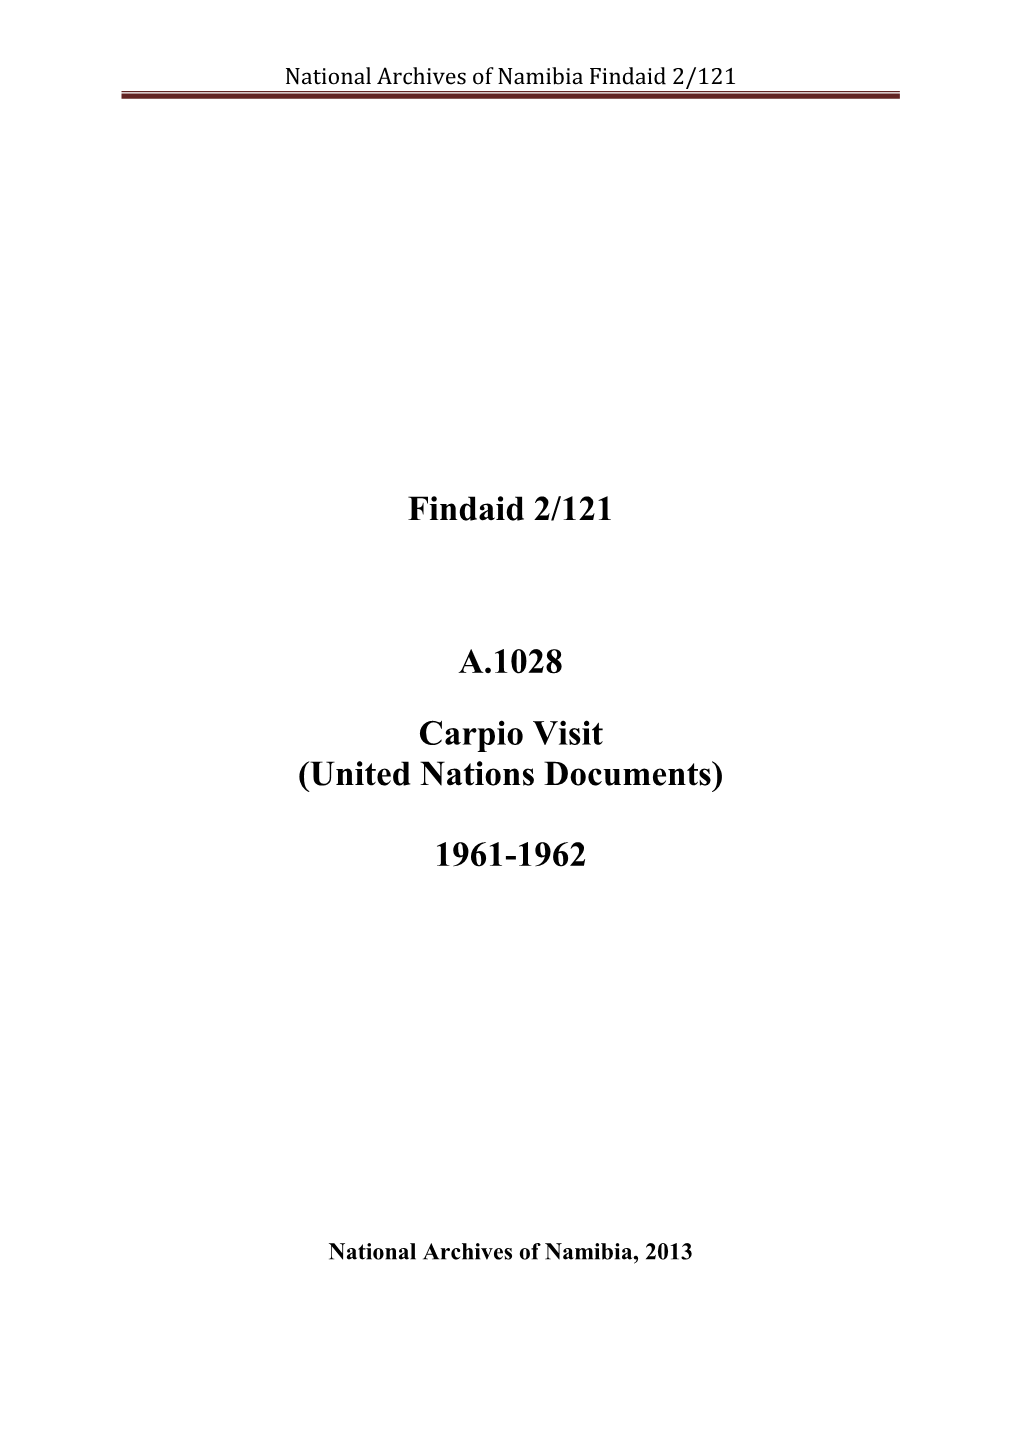 Findaid 2/121 A.1028 Carpio Visit (United Nations Documents)